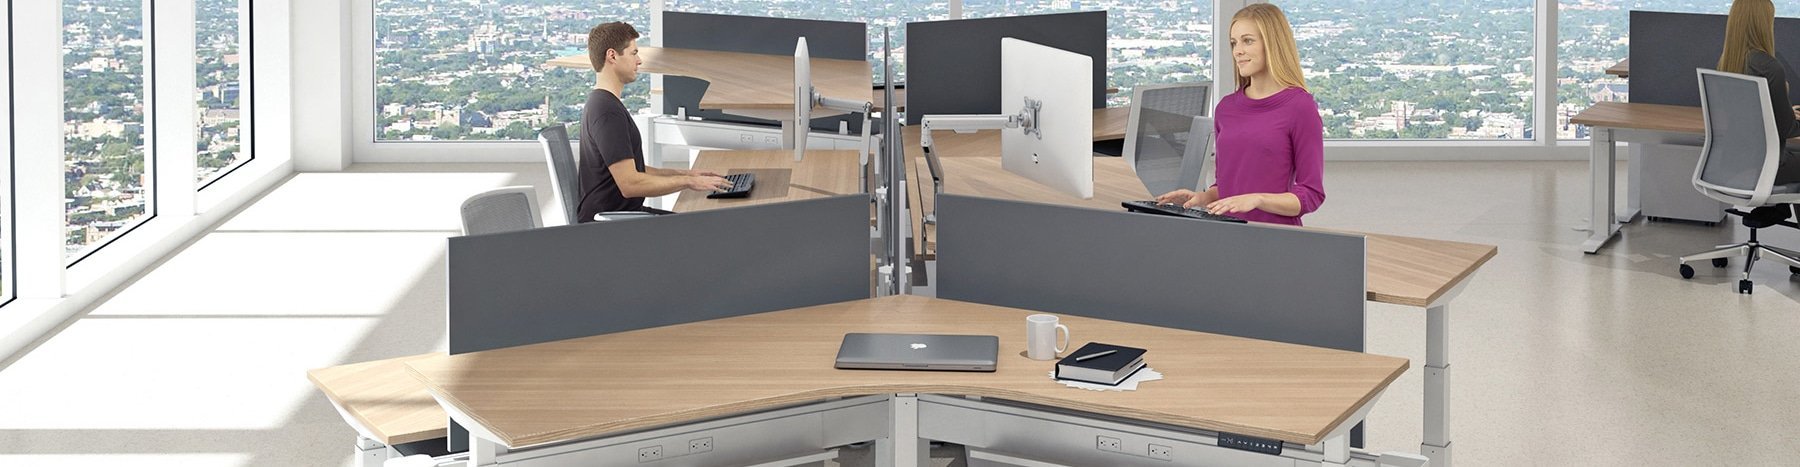 Standup desks in a bright modern office